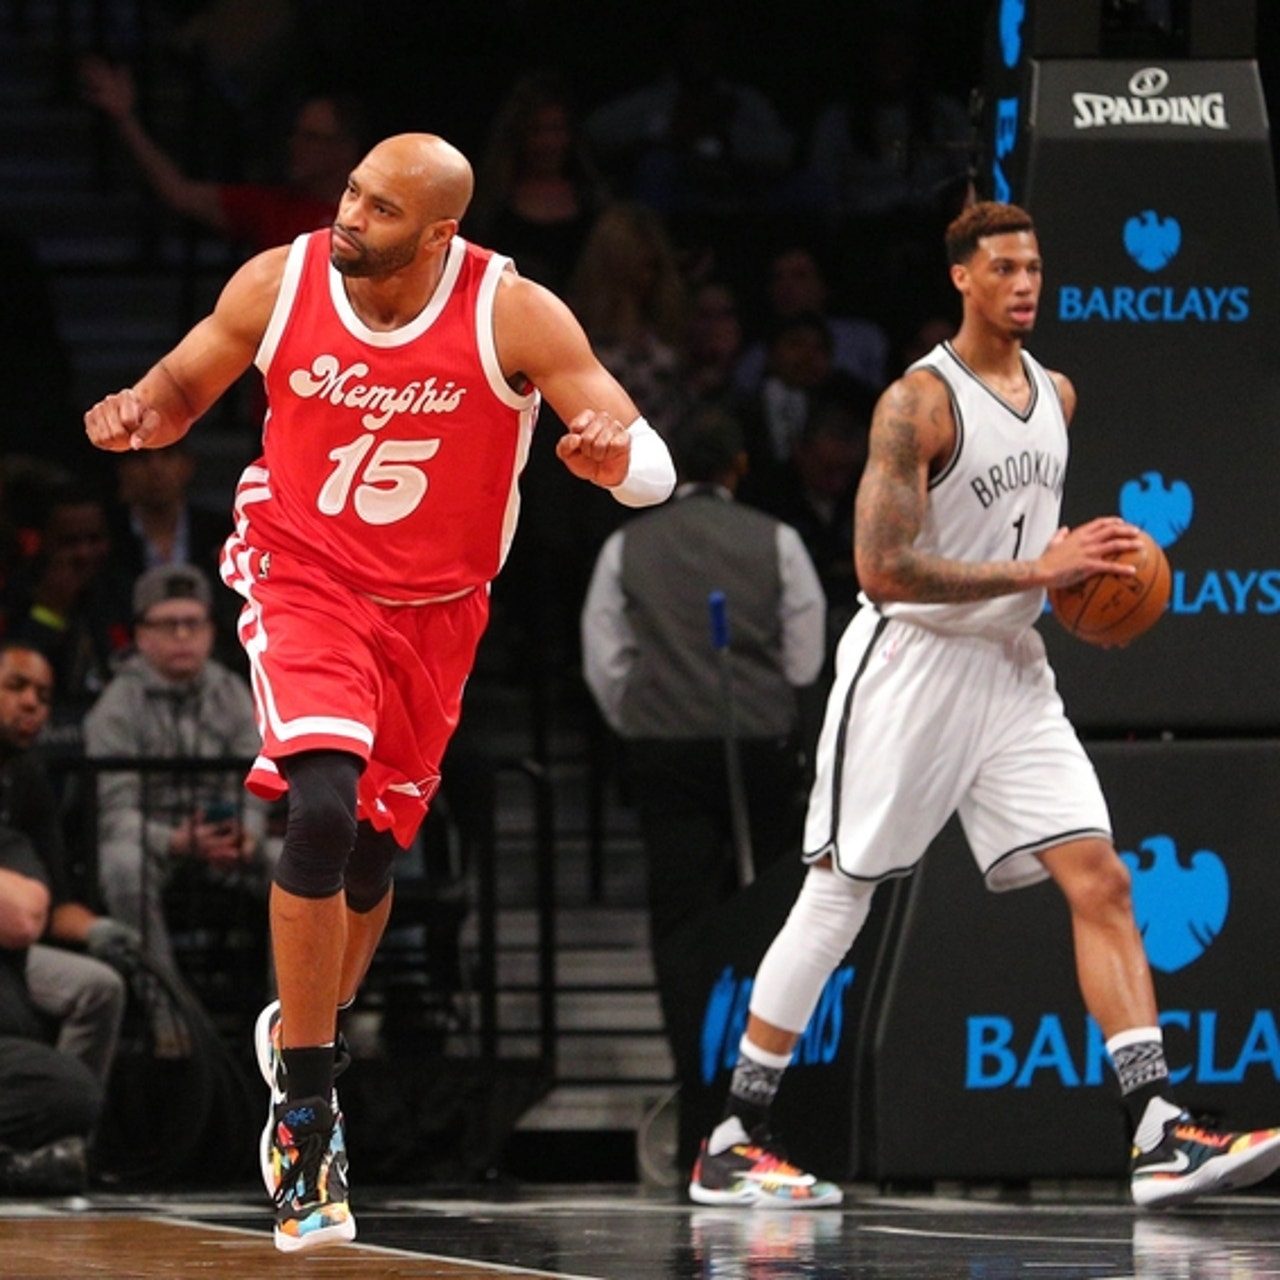 Should the Brooklyn Nets retire Vince Carter's jersey?